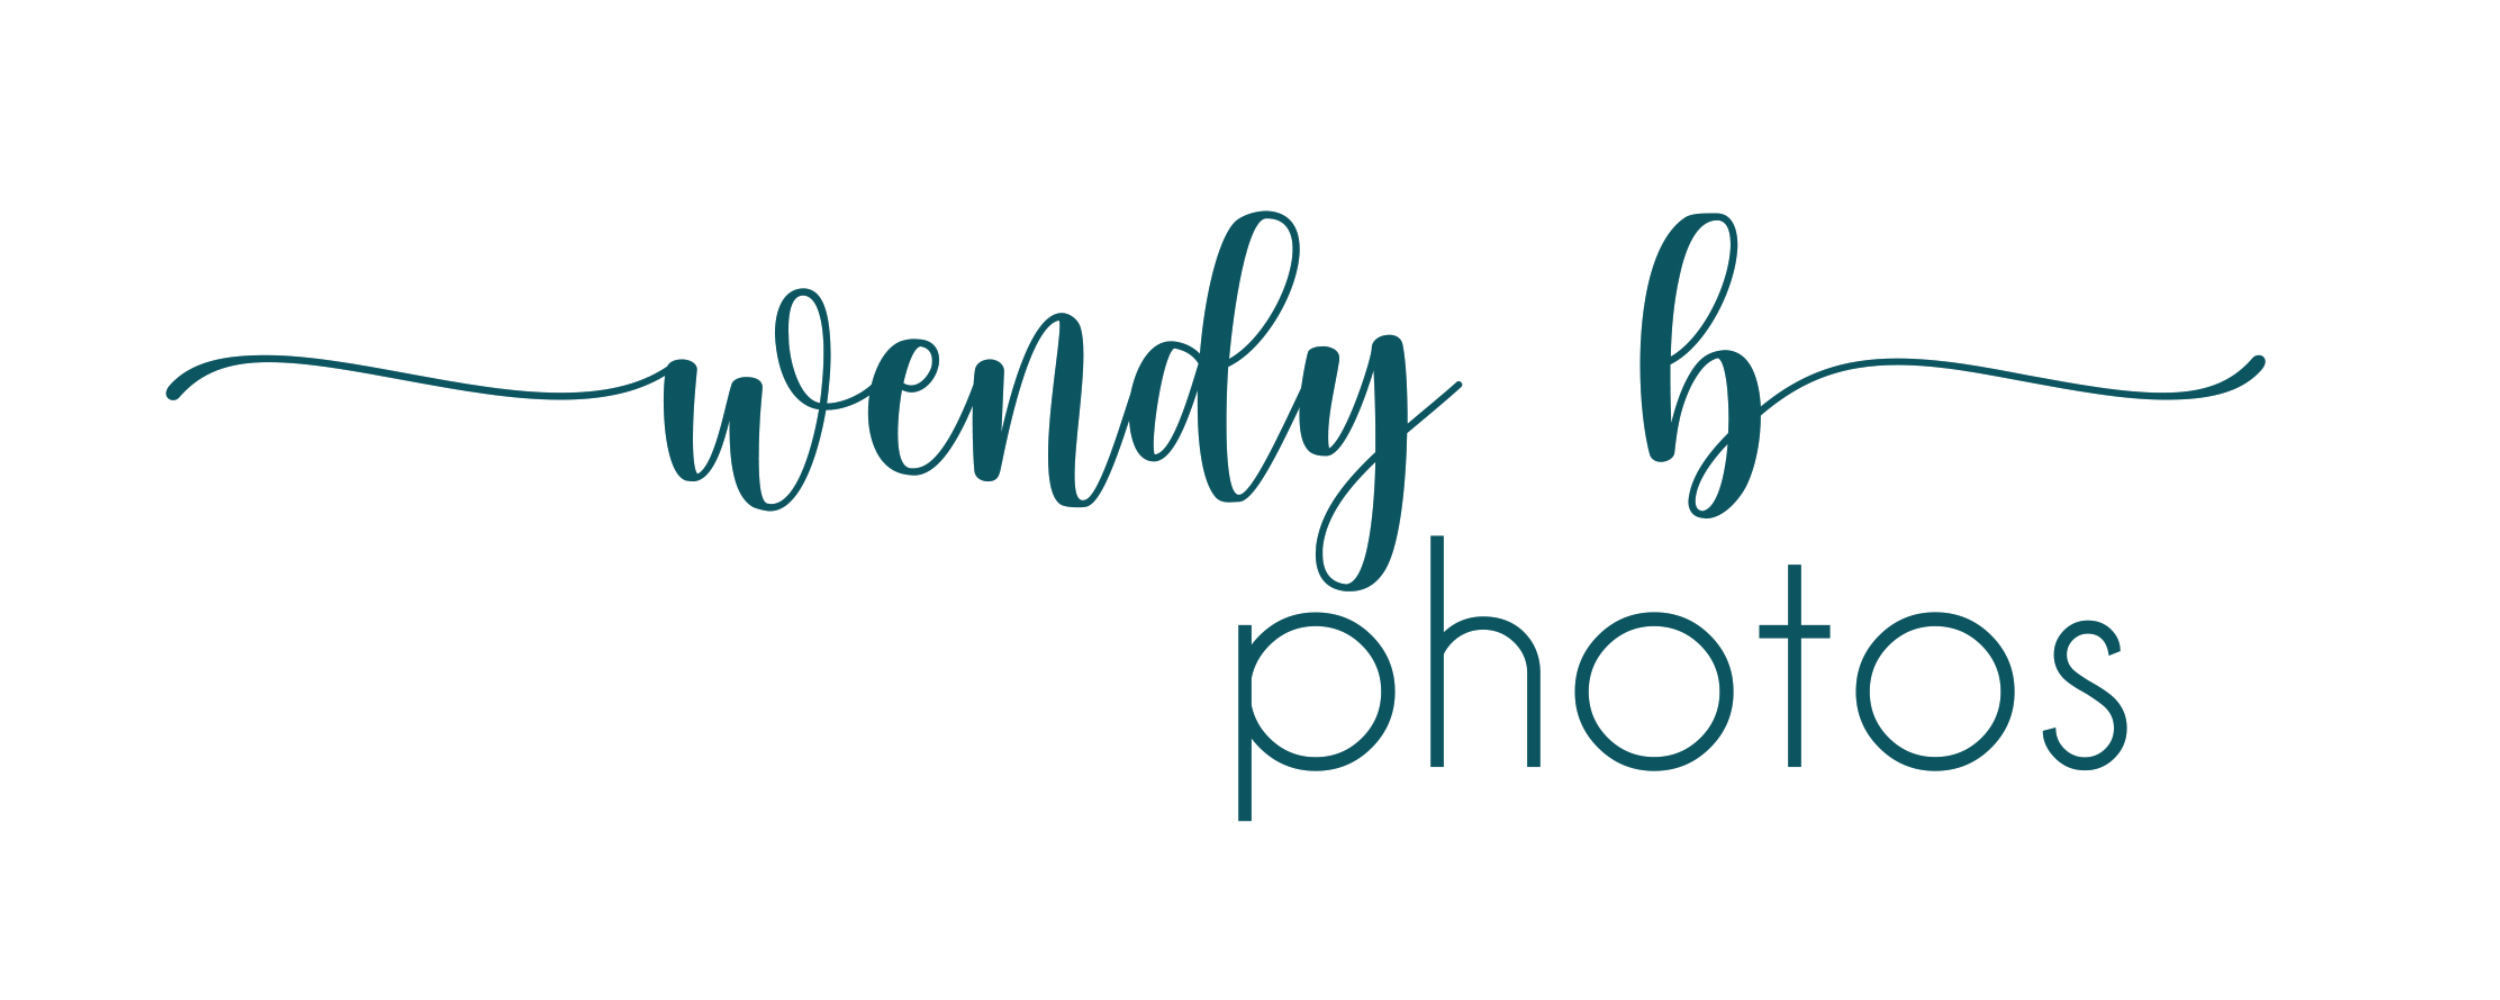 wendy b photos logo